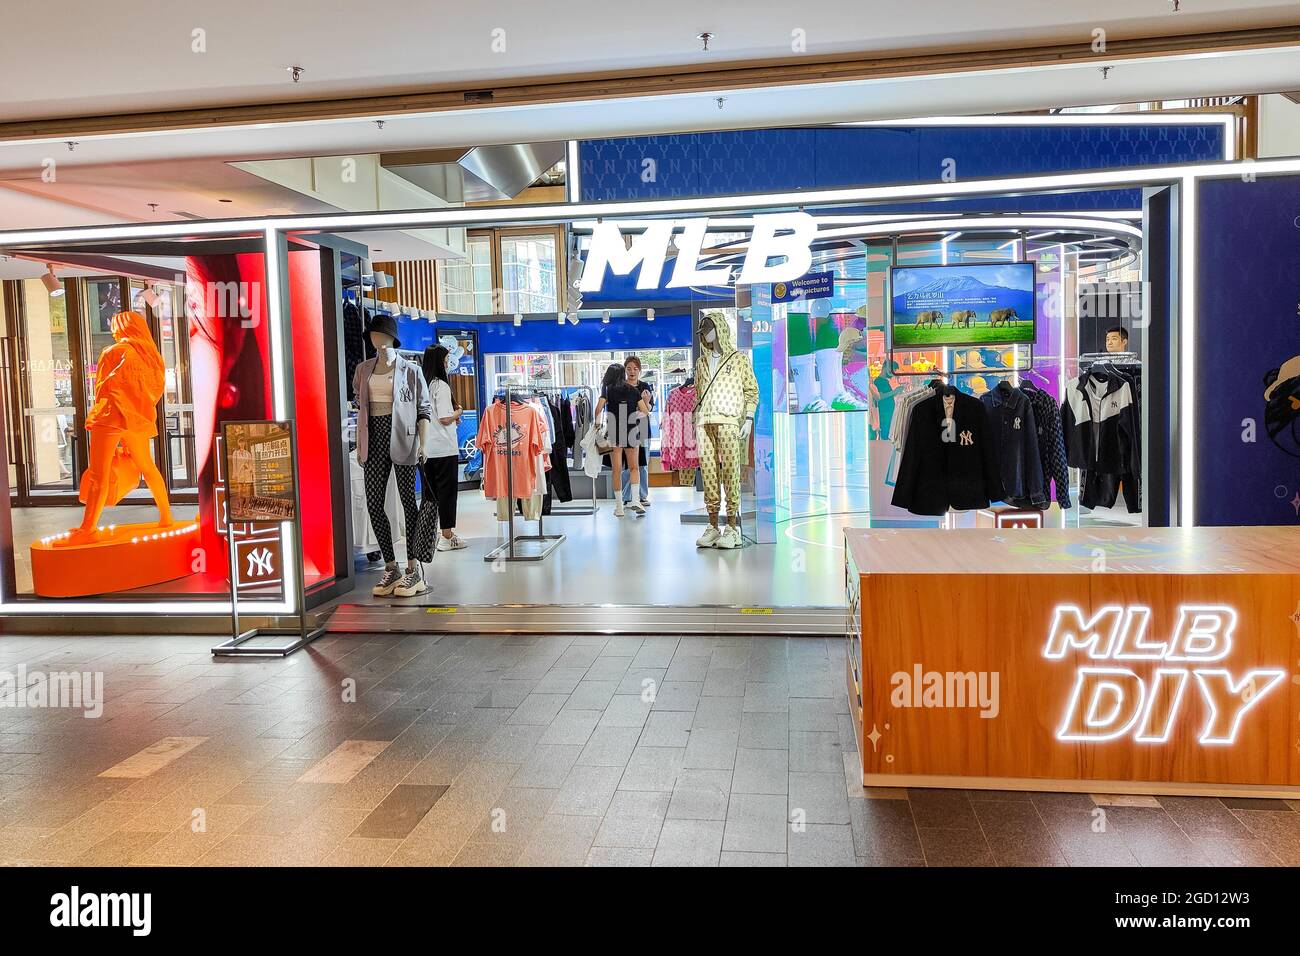 NEWS] Fashion Brand MLB Opens Singapore Flagship Store at Mandarin